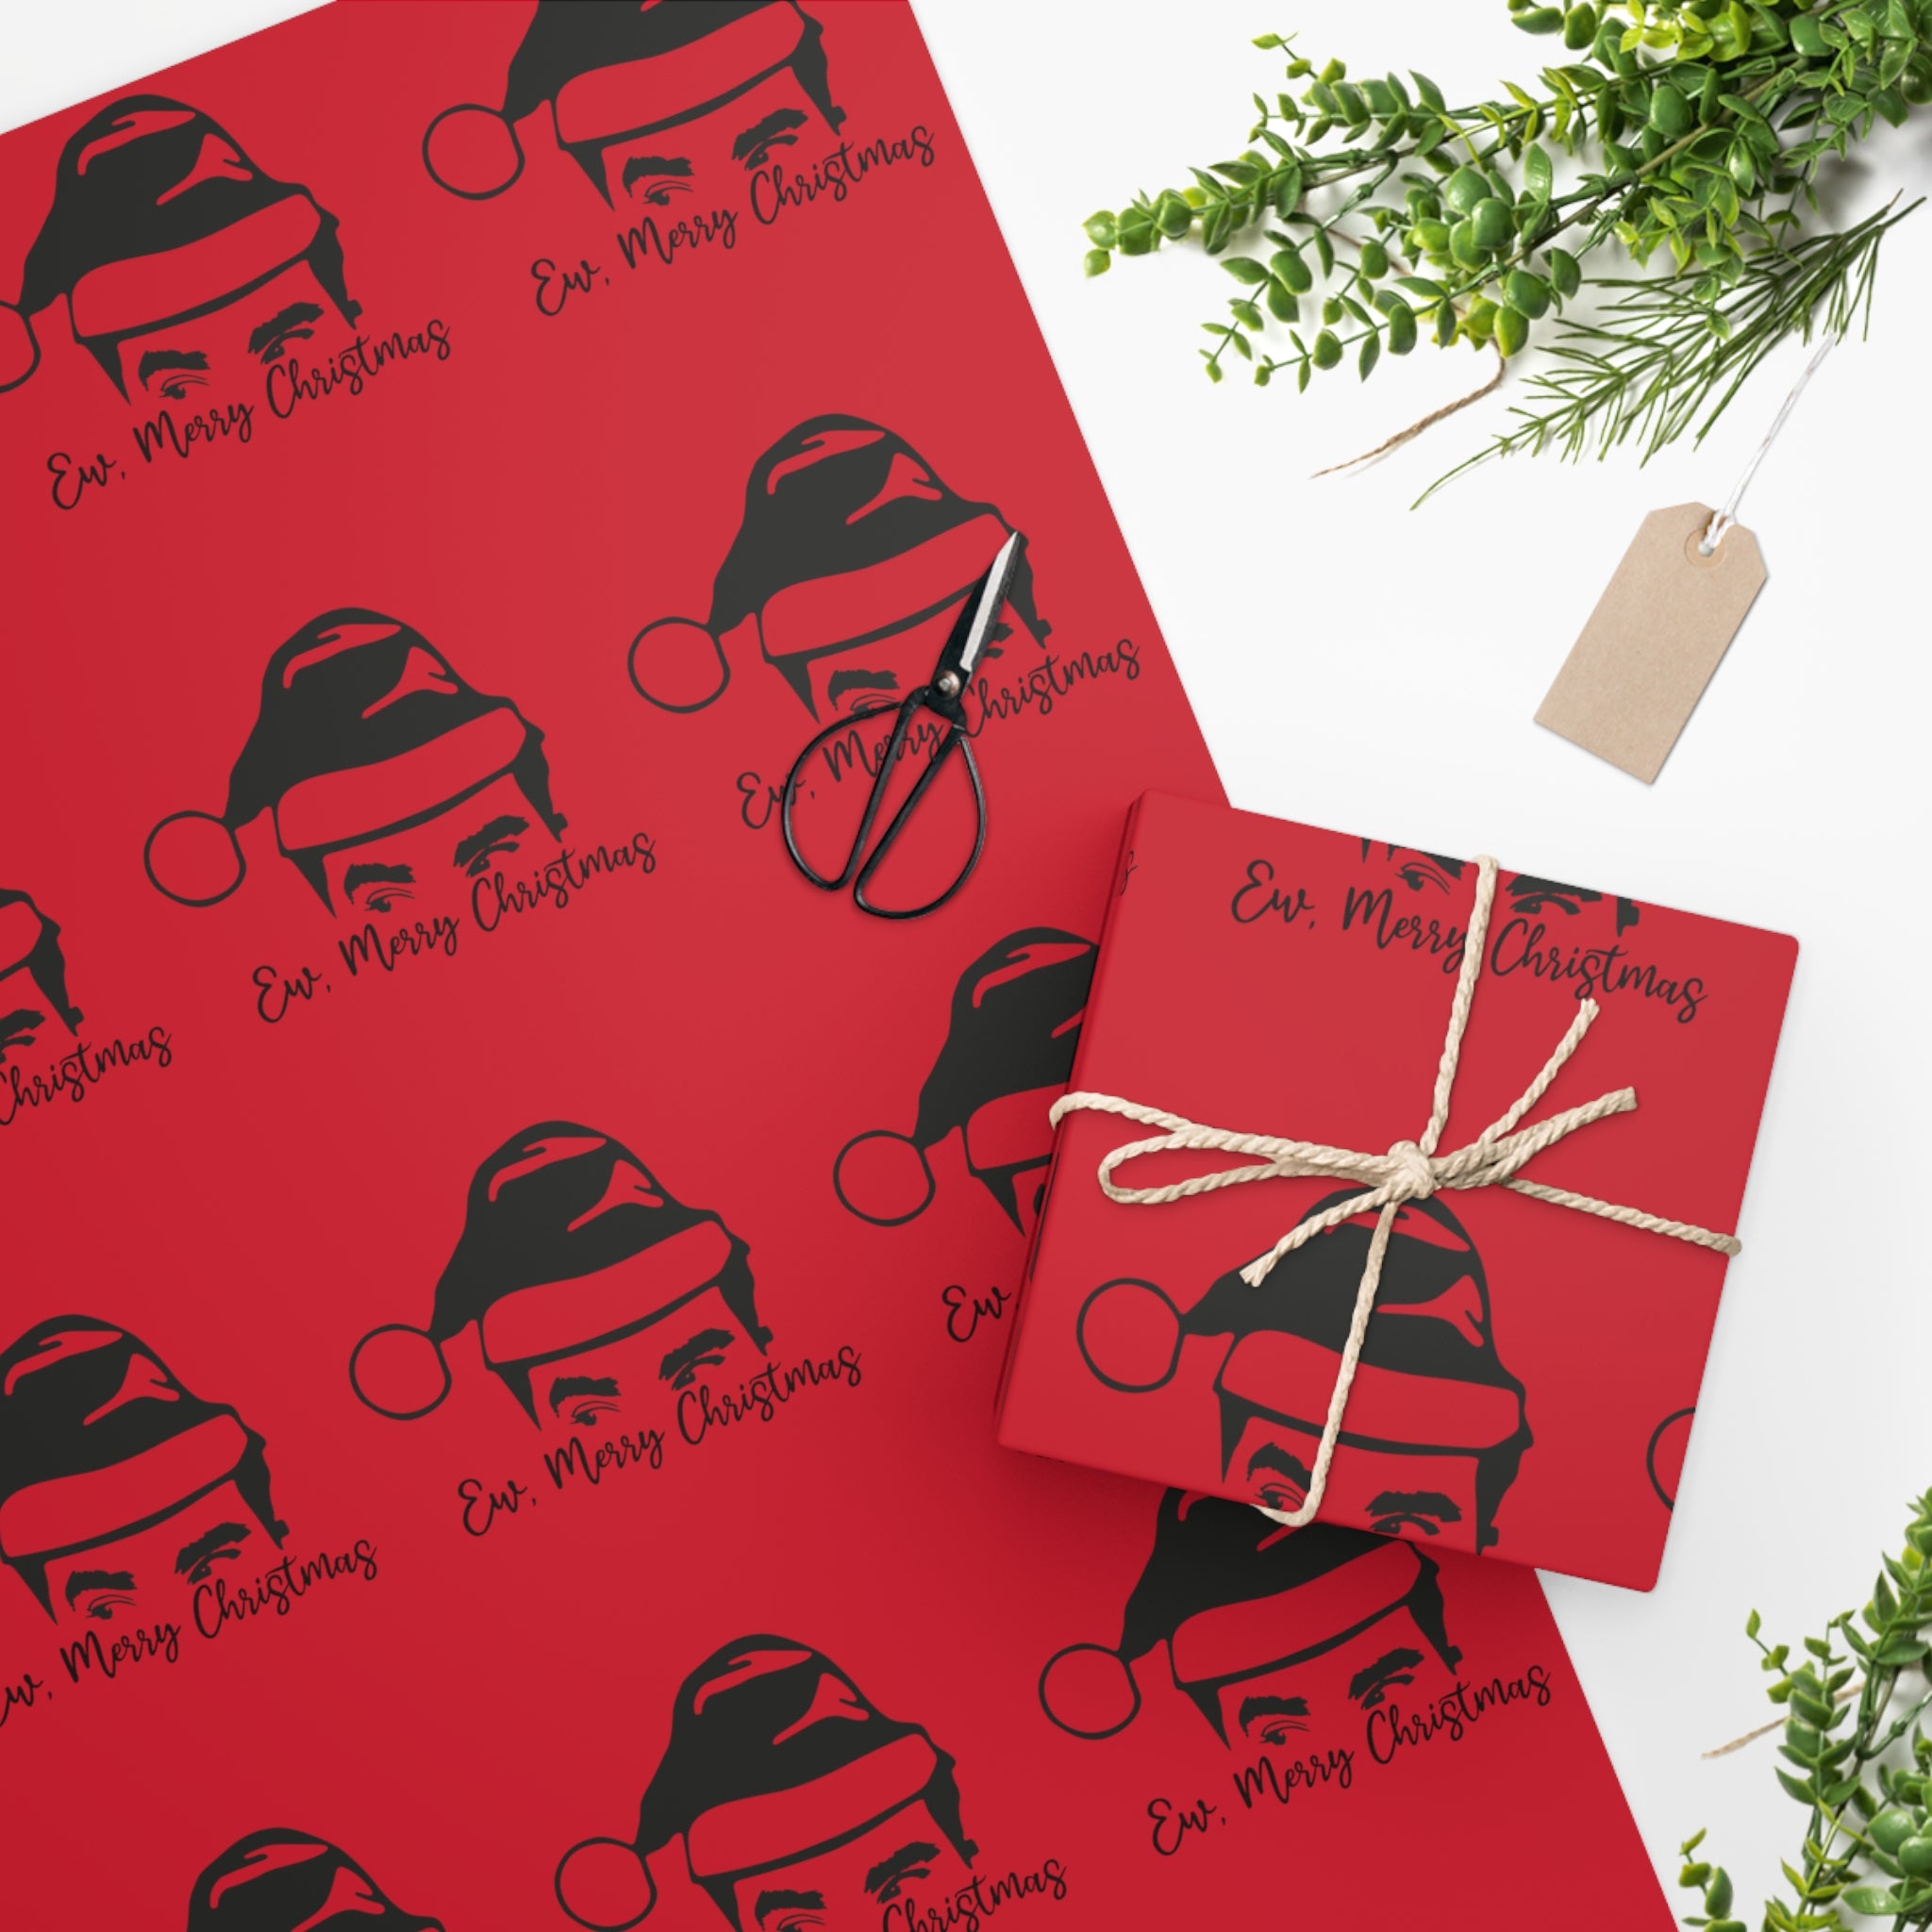 Schitt's Creek Red Ew, Merry Christmas Wrapping Paper